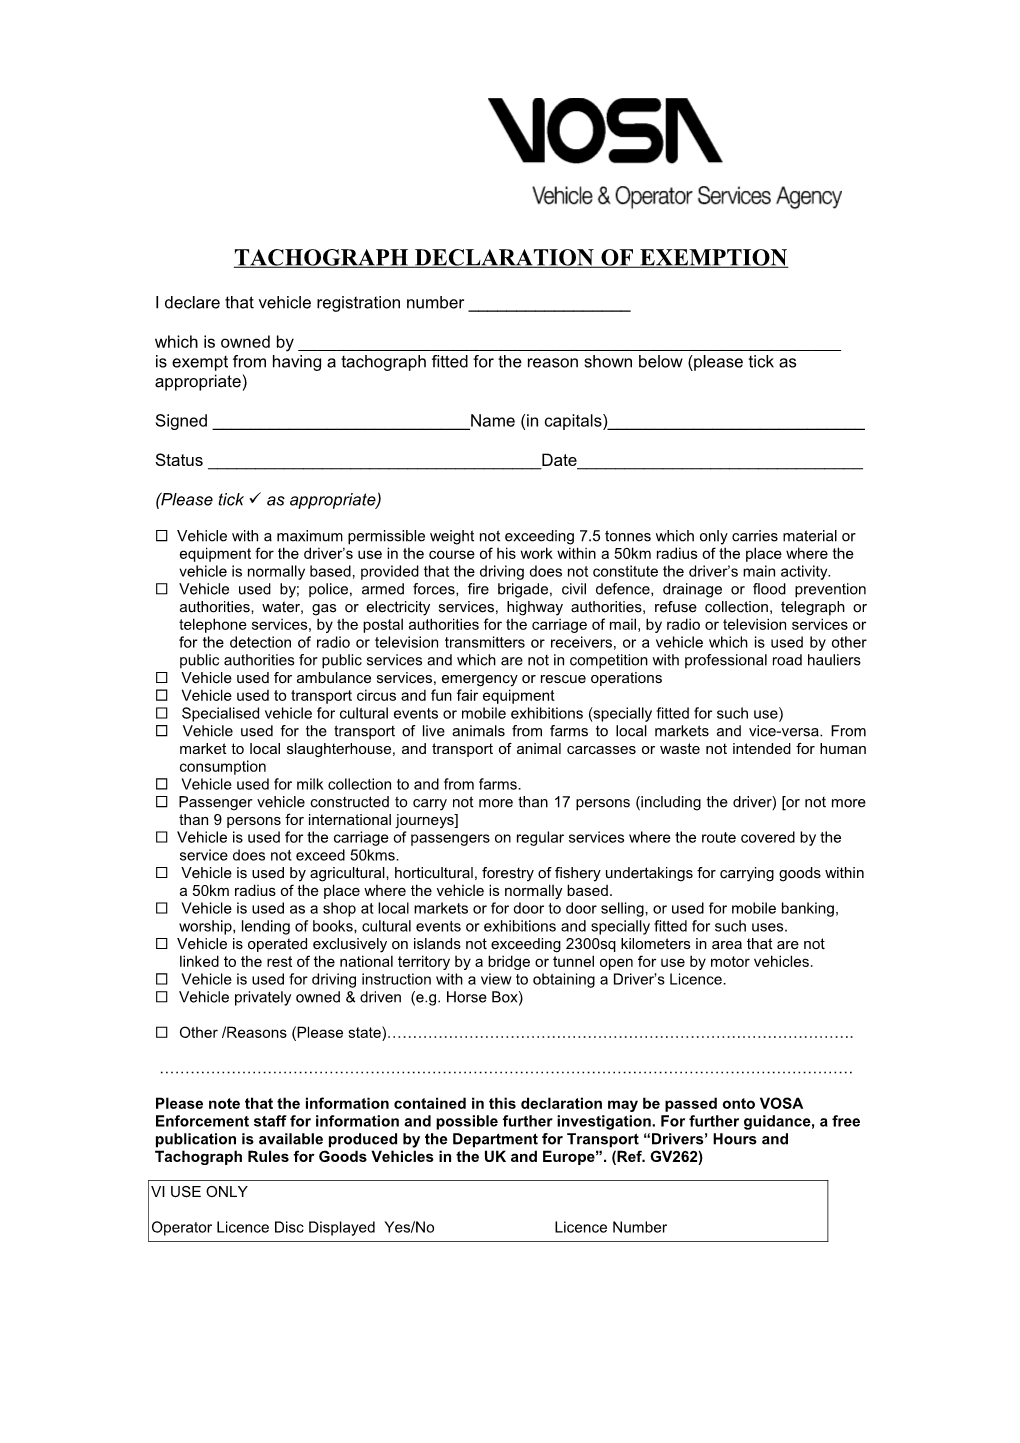 Tachograph Declaration of Exemption